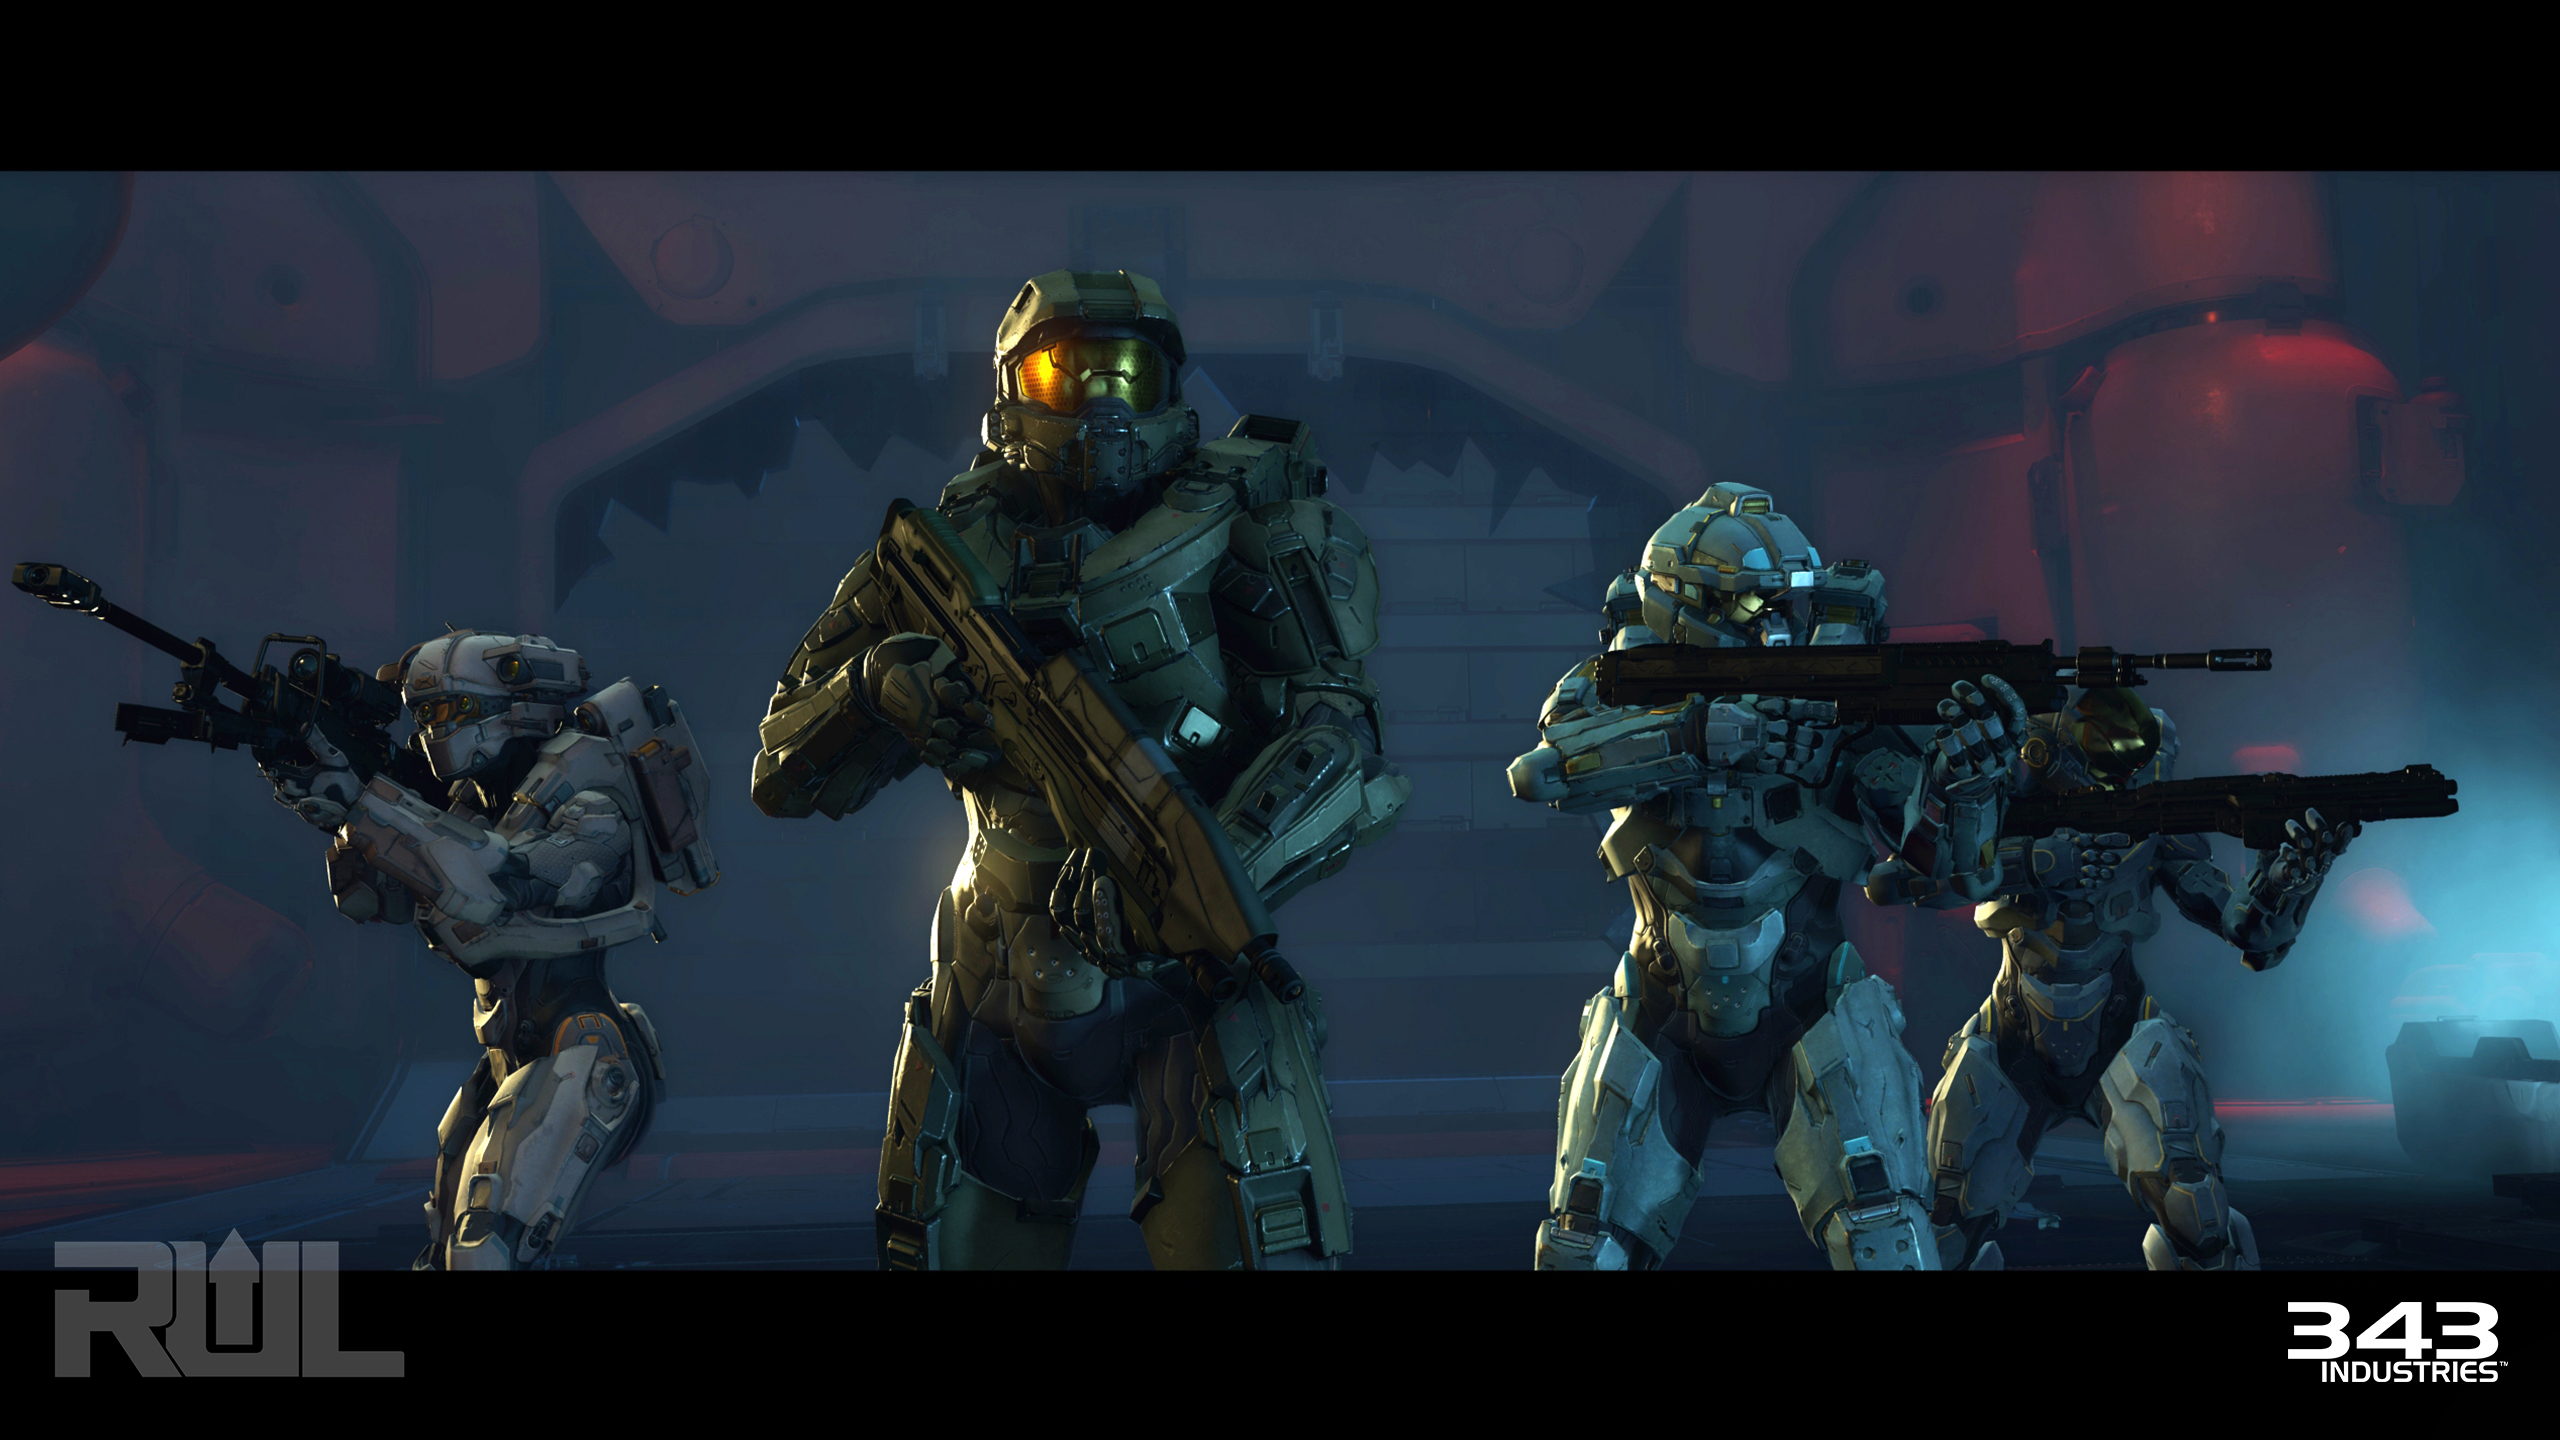 Halo Guardians Screenshots Concept Art Renders And